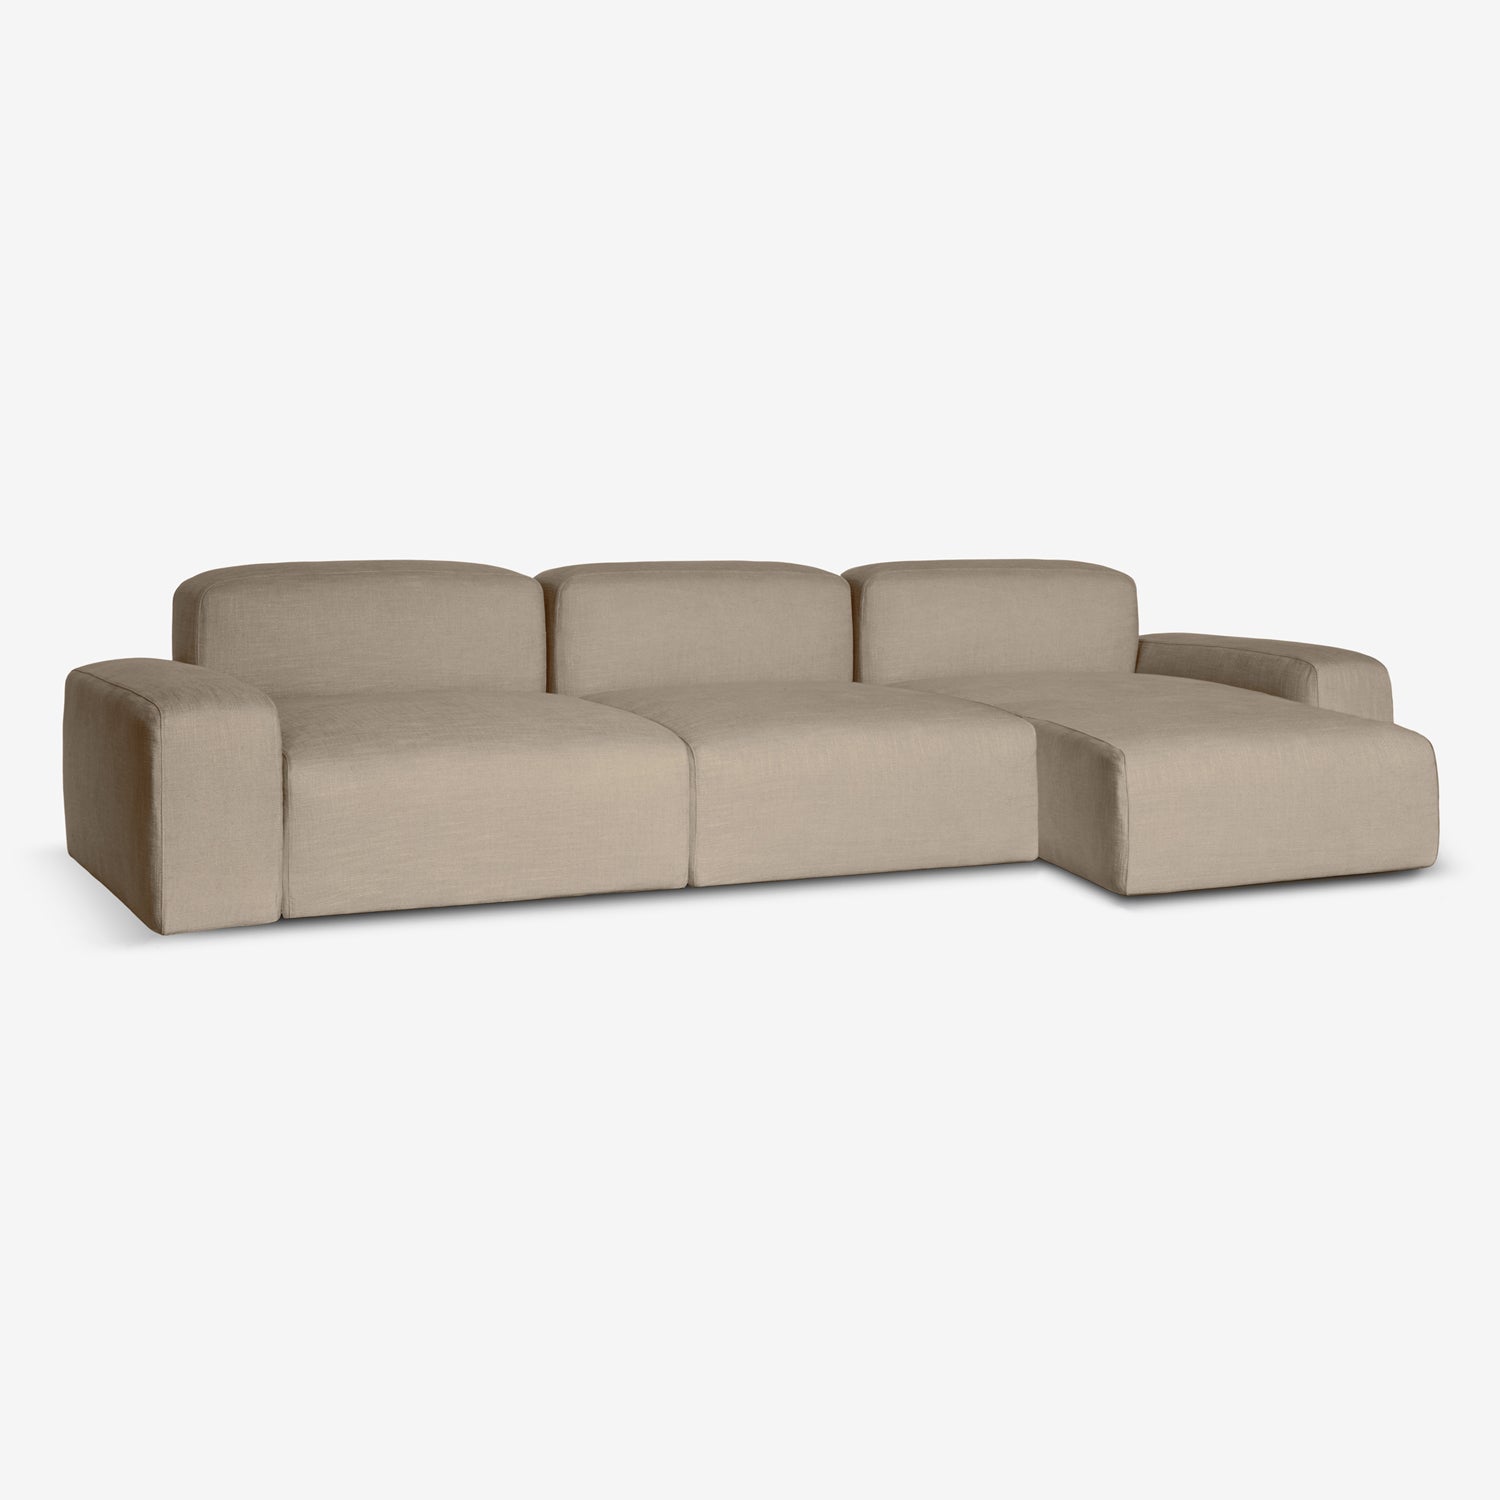 Libero sustainable chaise sofa on white background